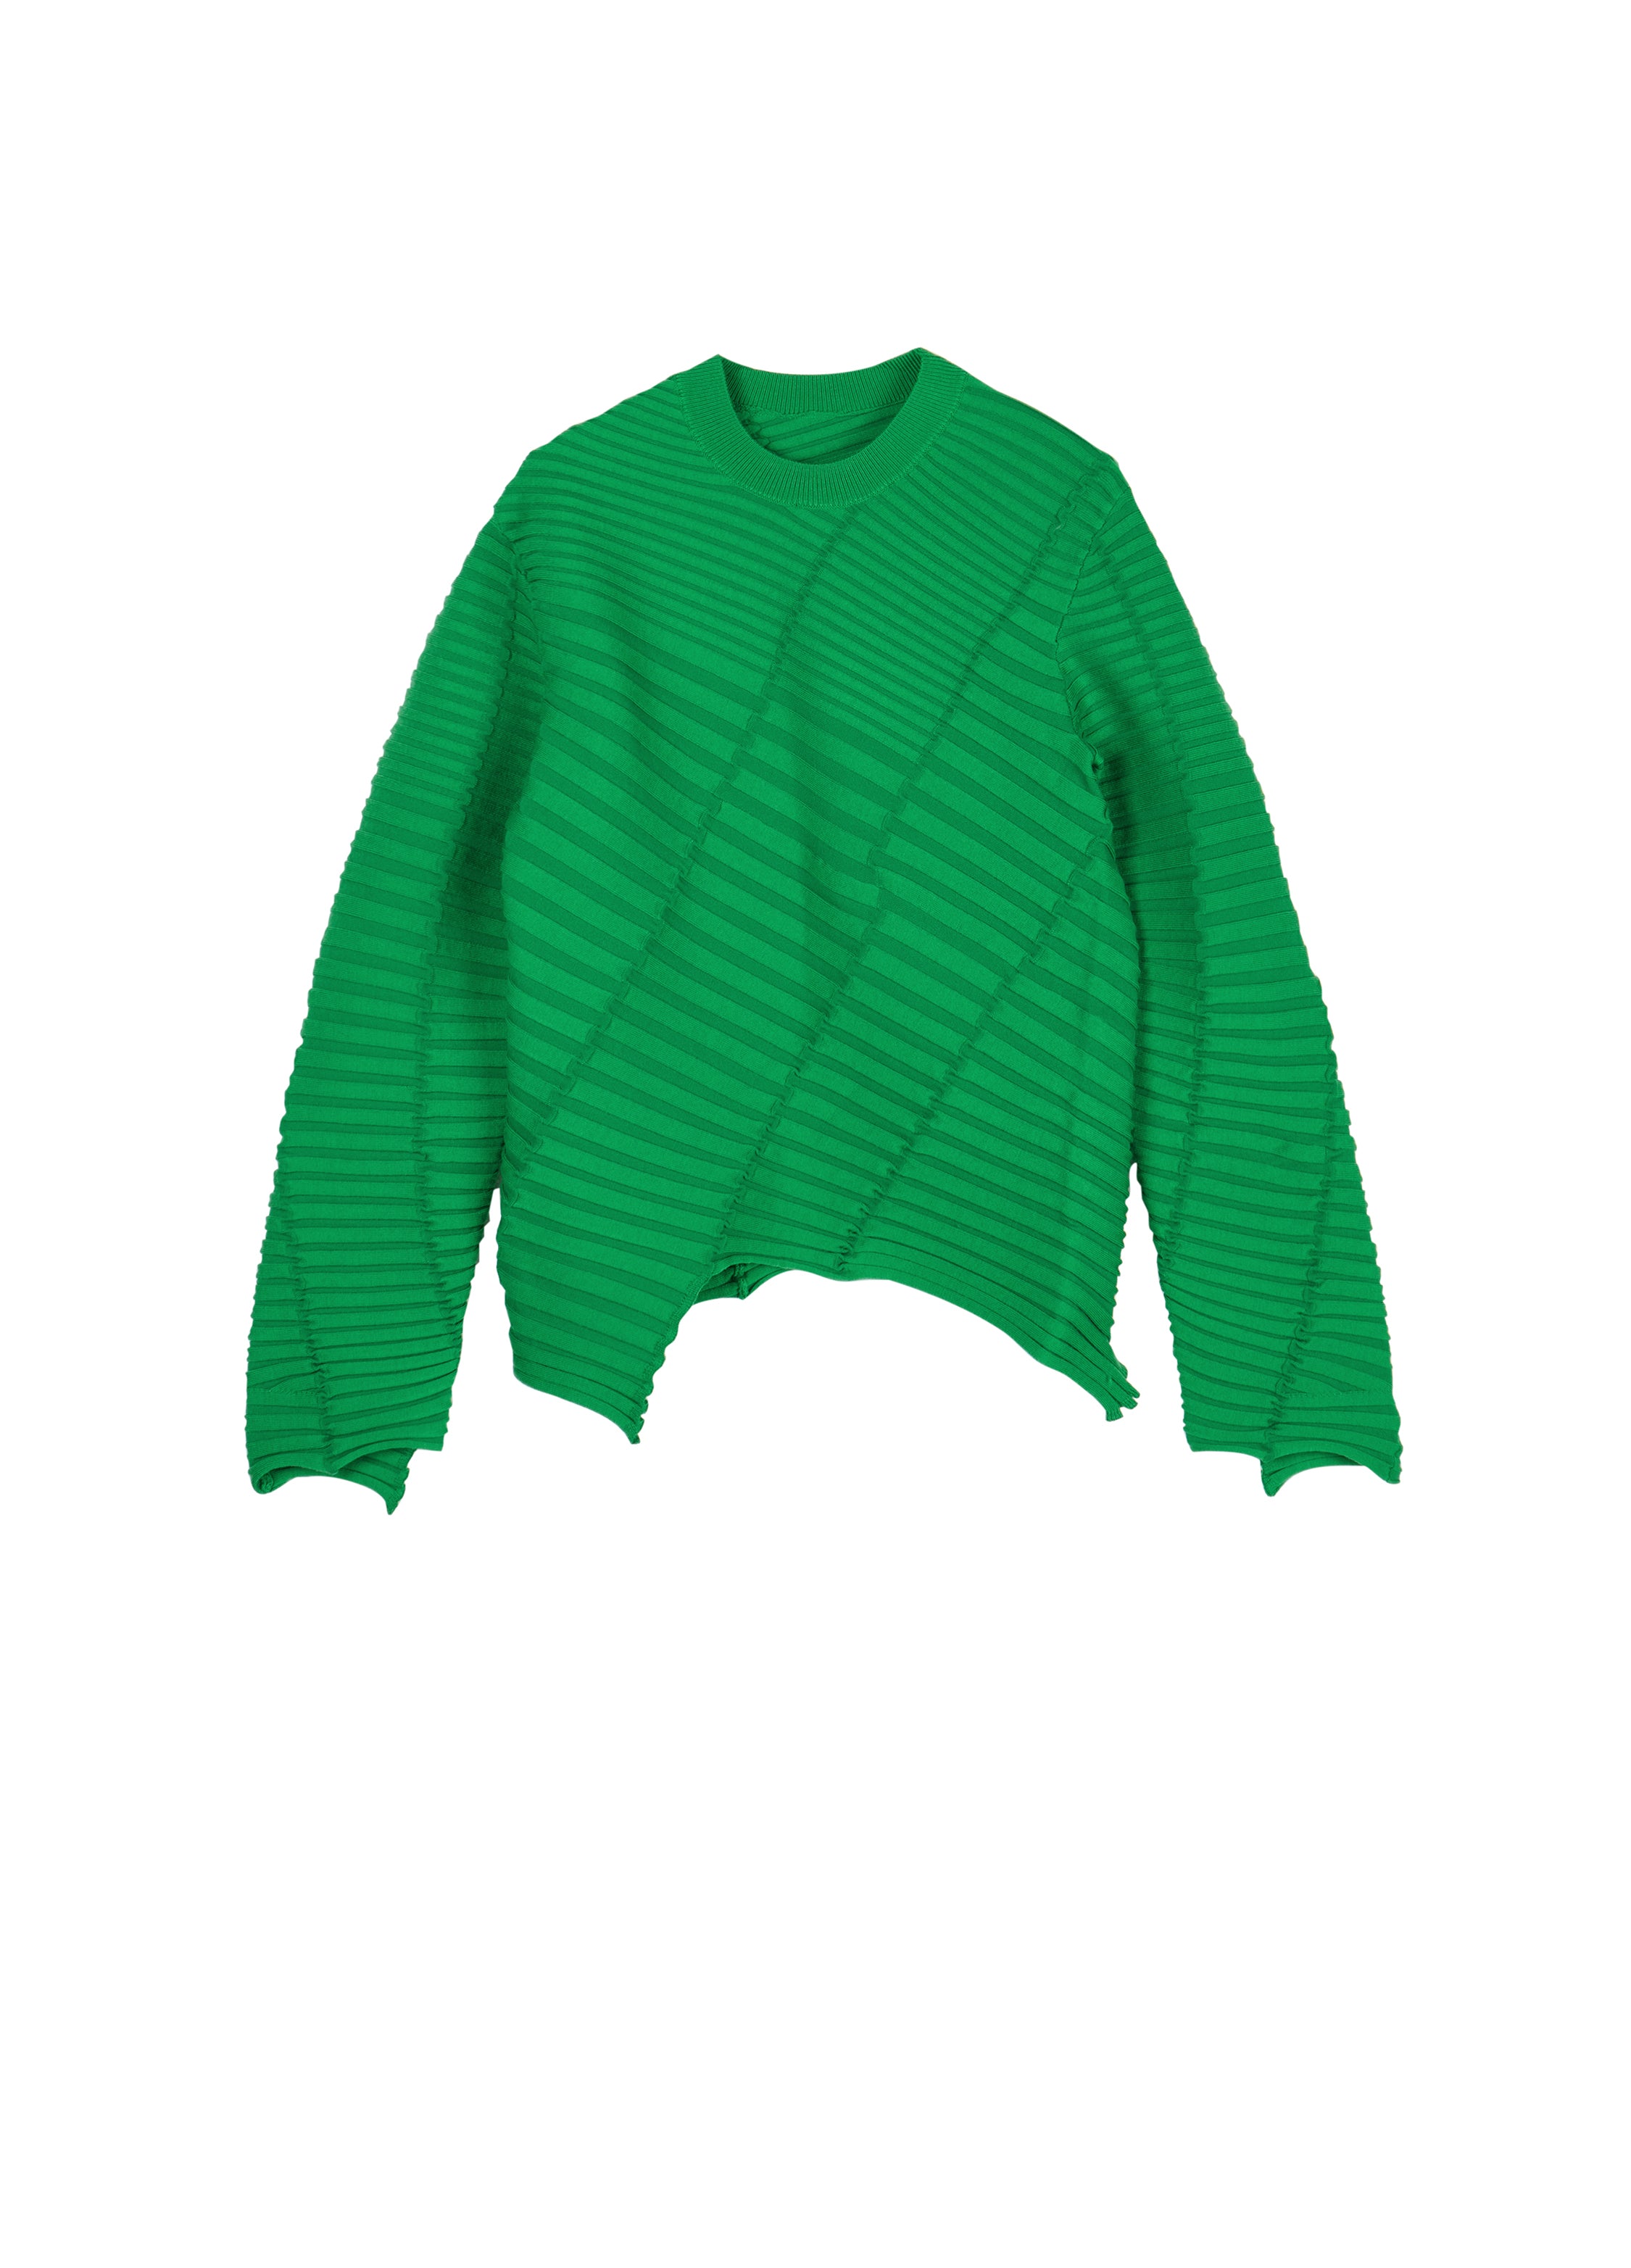 JNBY Green Sweater